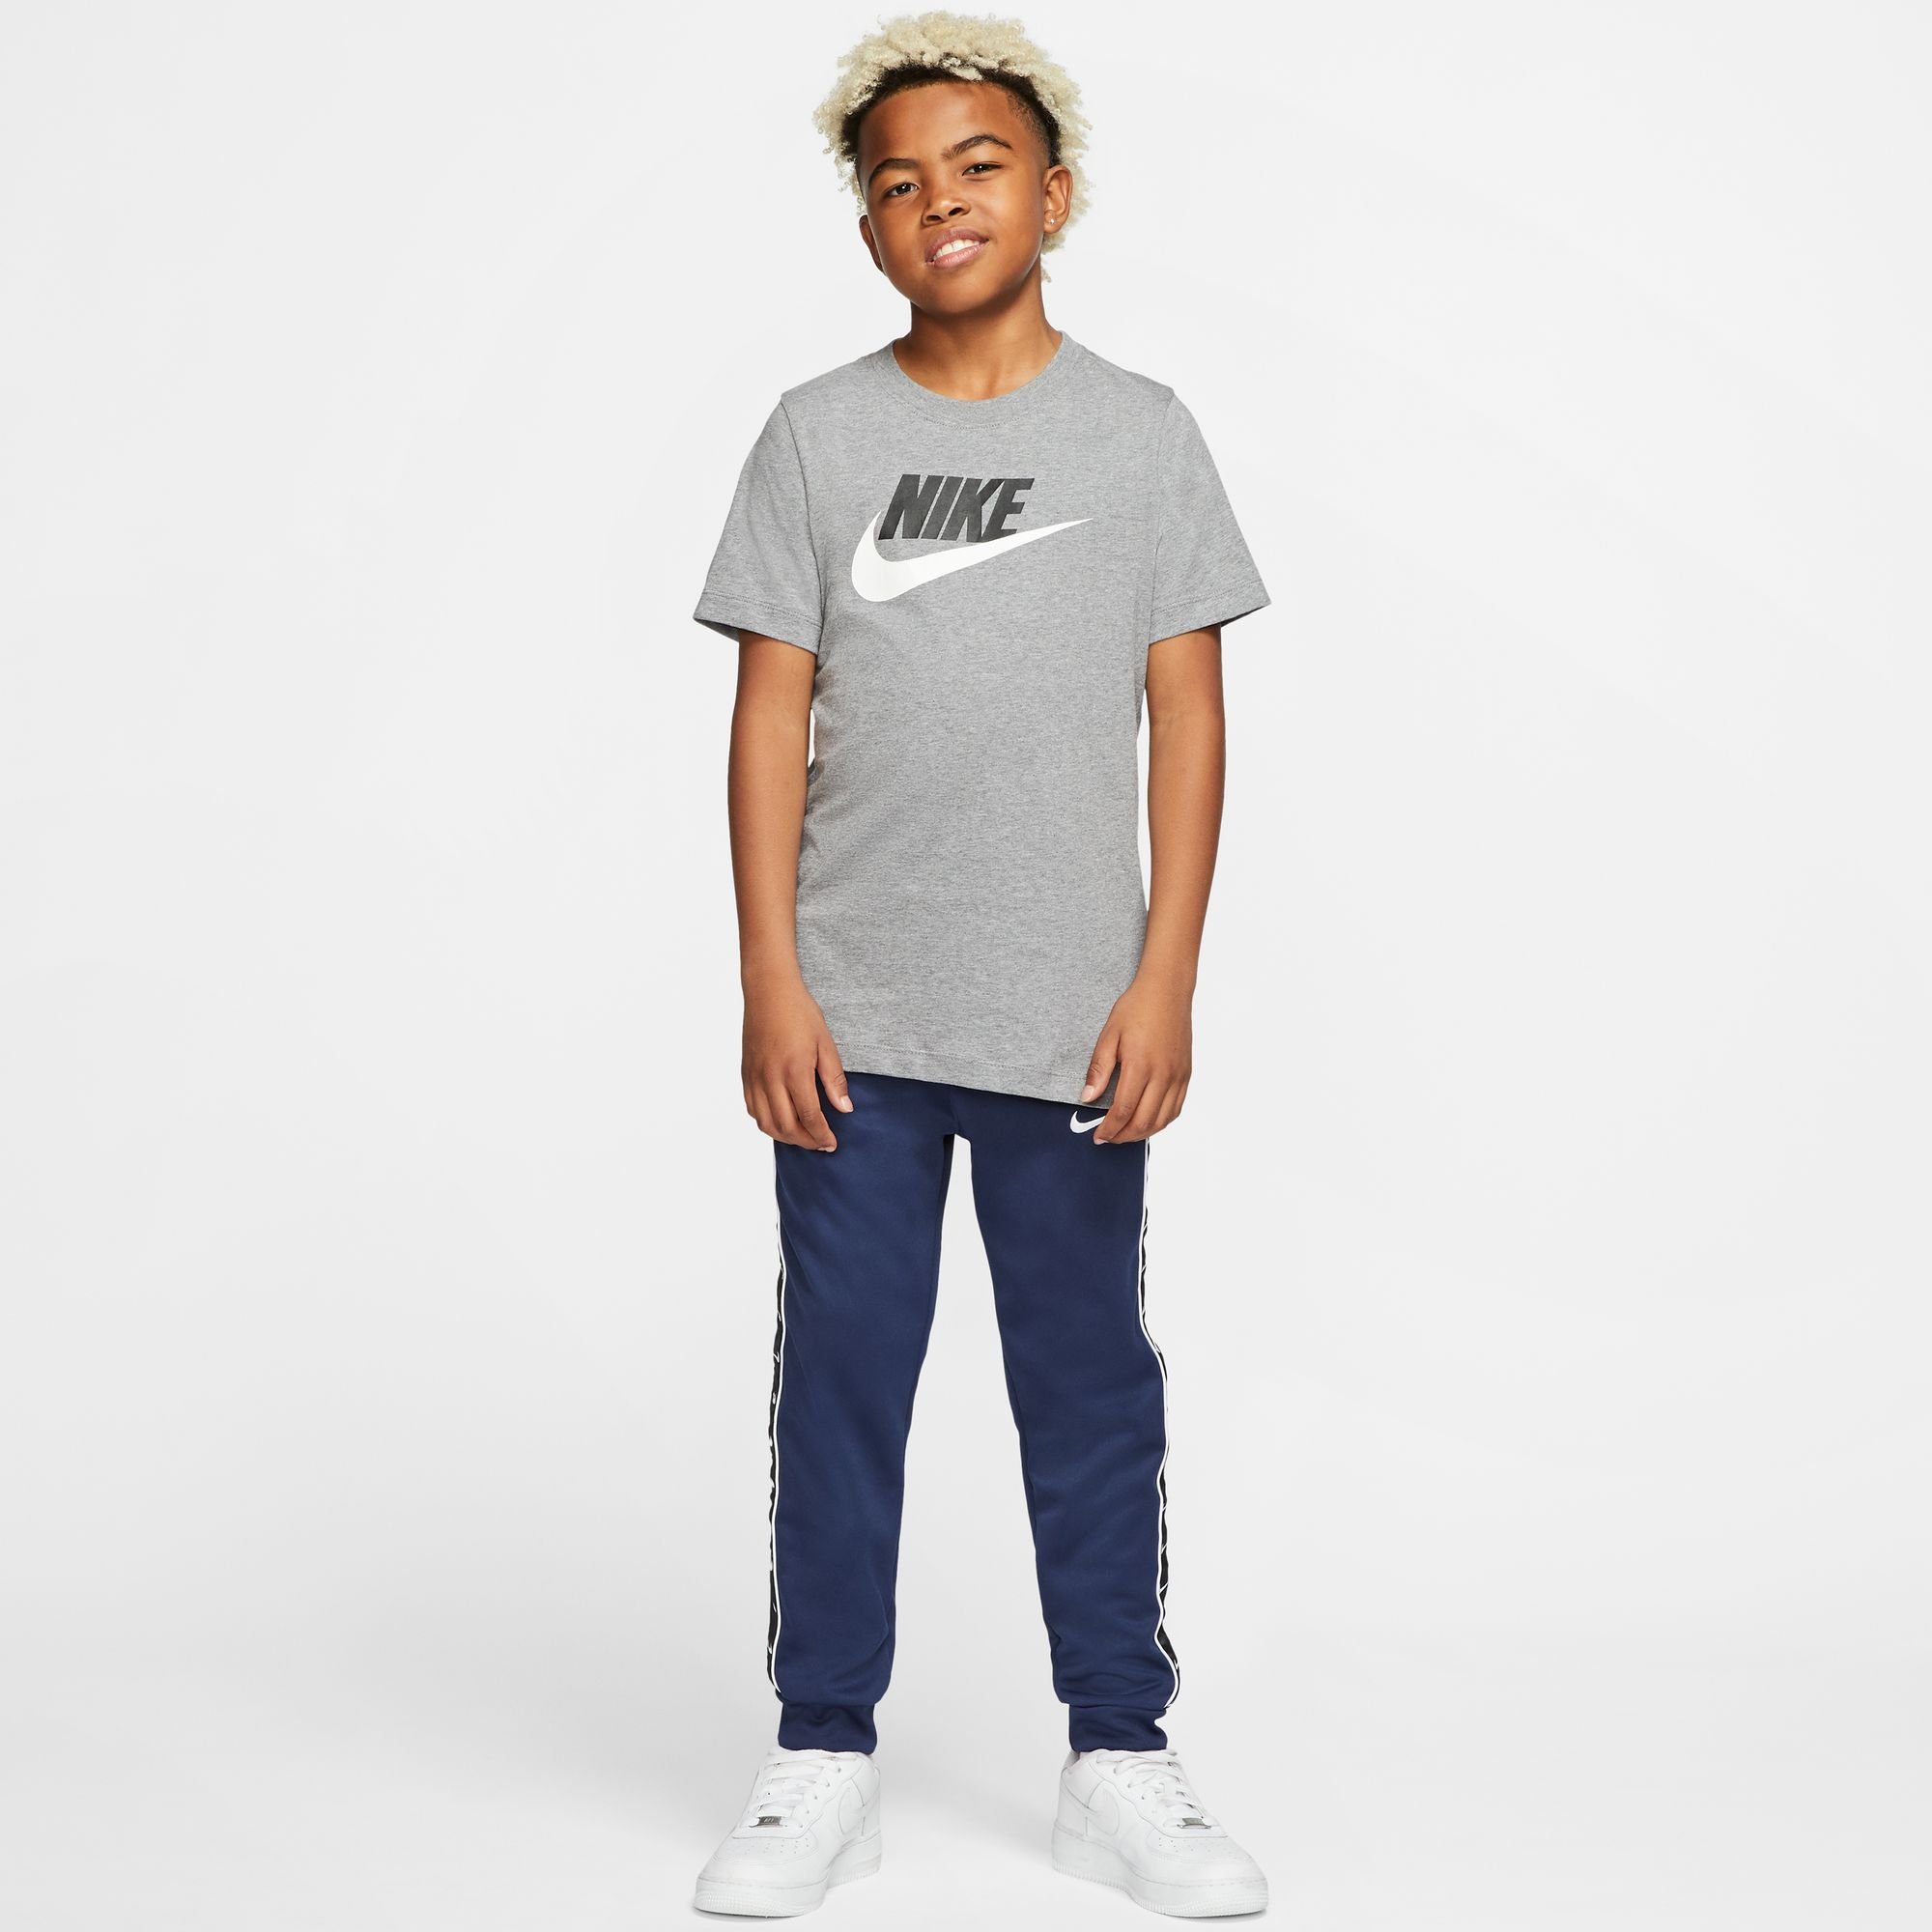 KIDS' BIG T-Shirt Sportswear Nike COTTON T-SHIRT grau-meliert